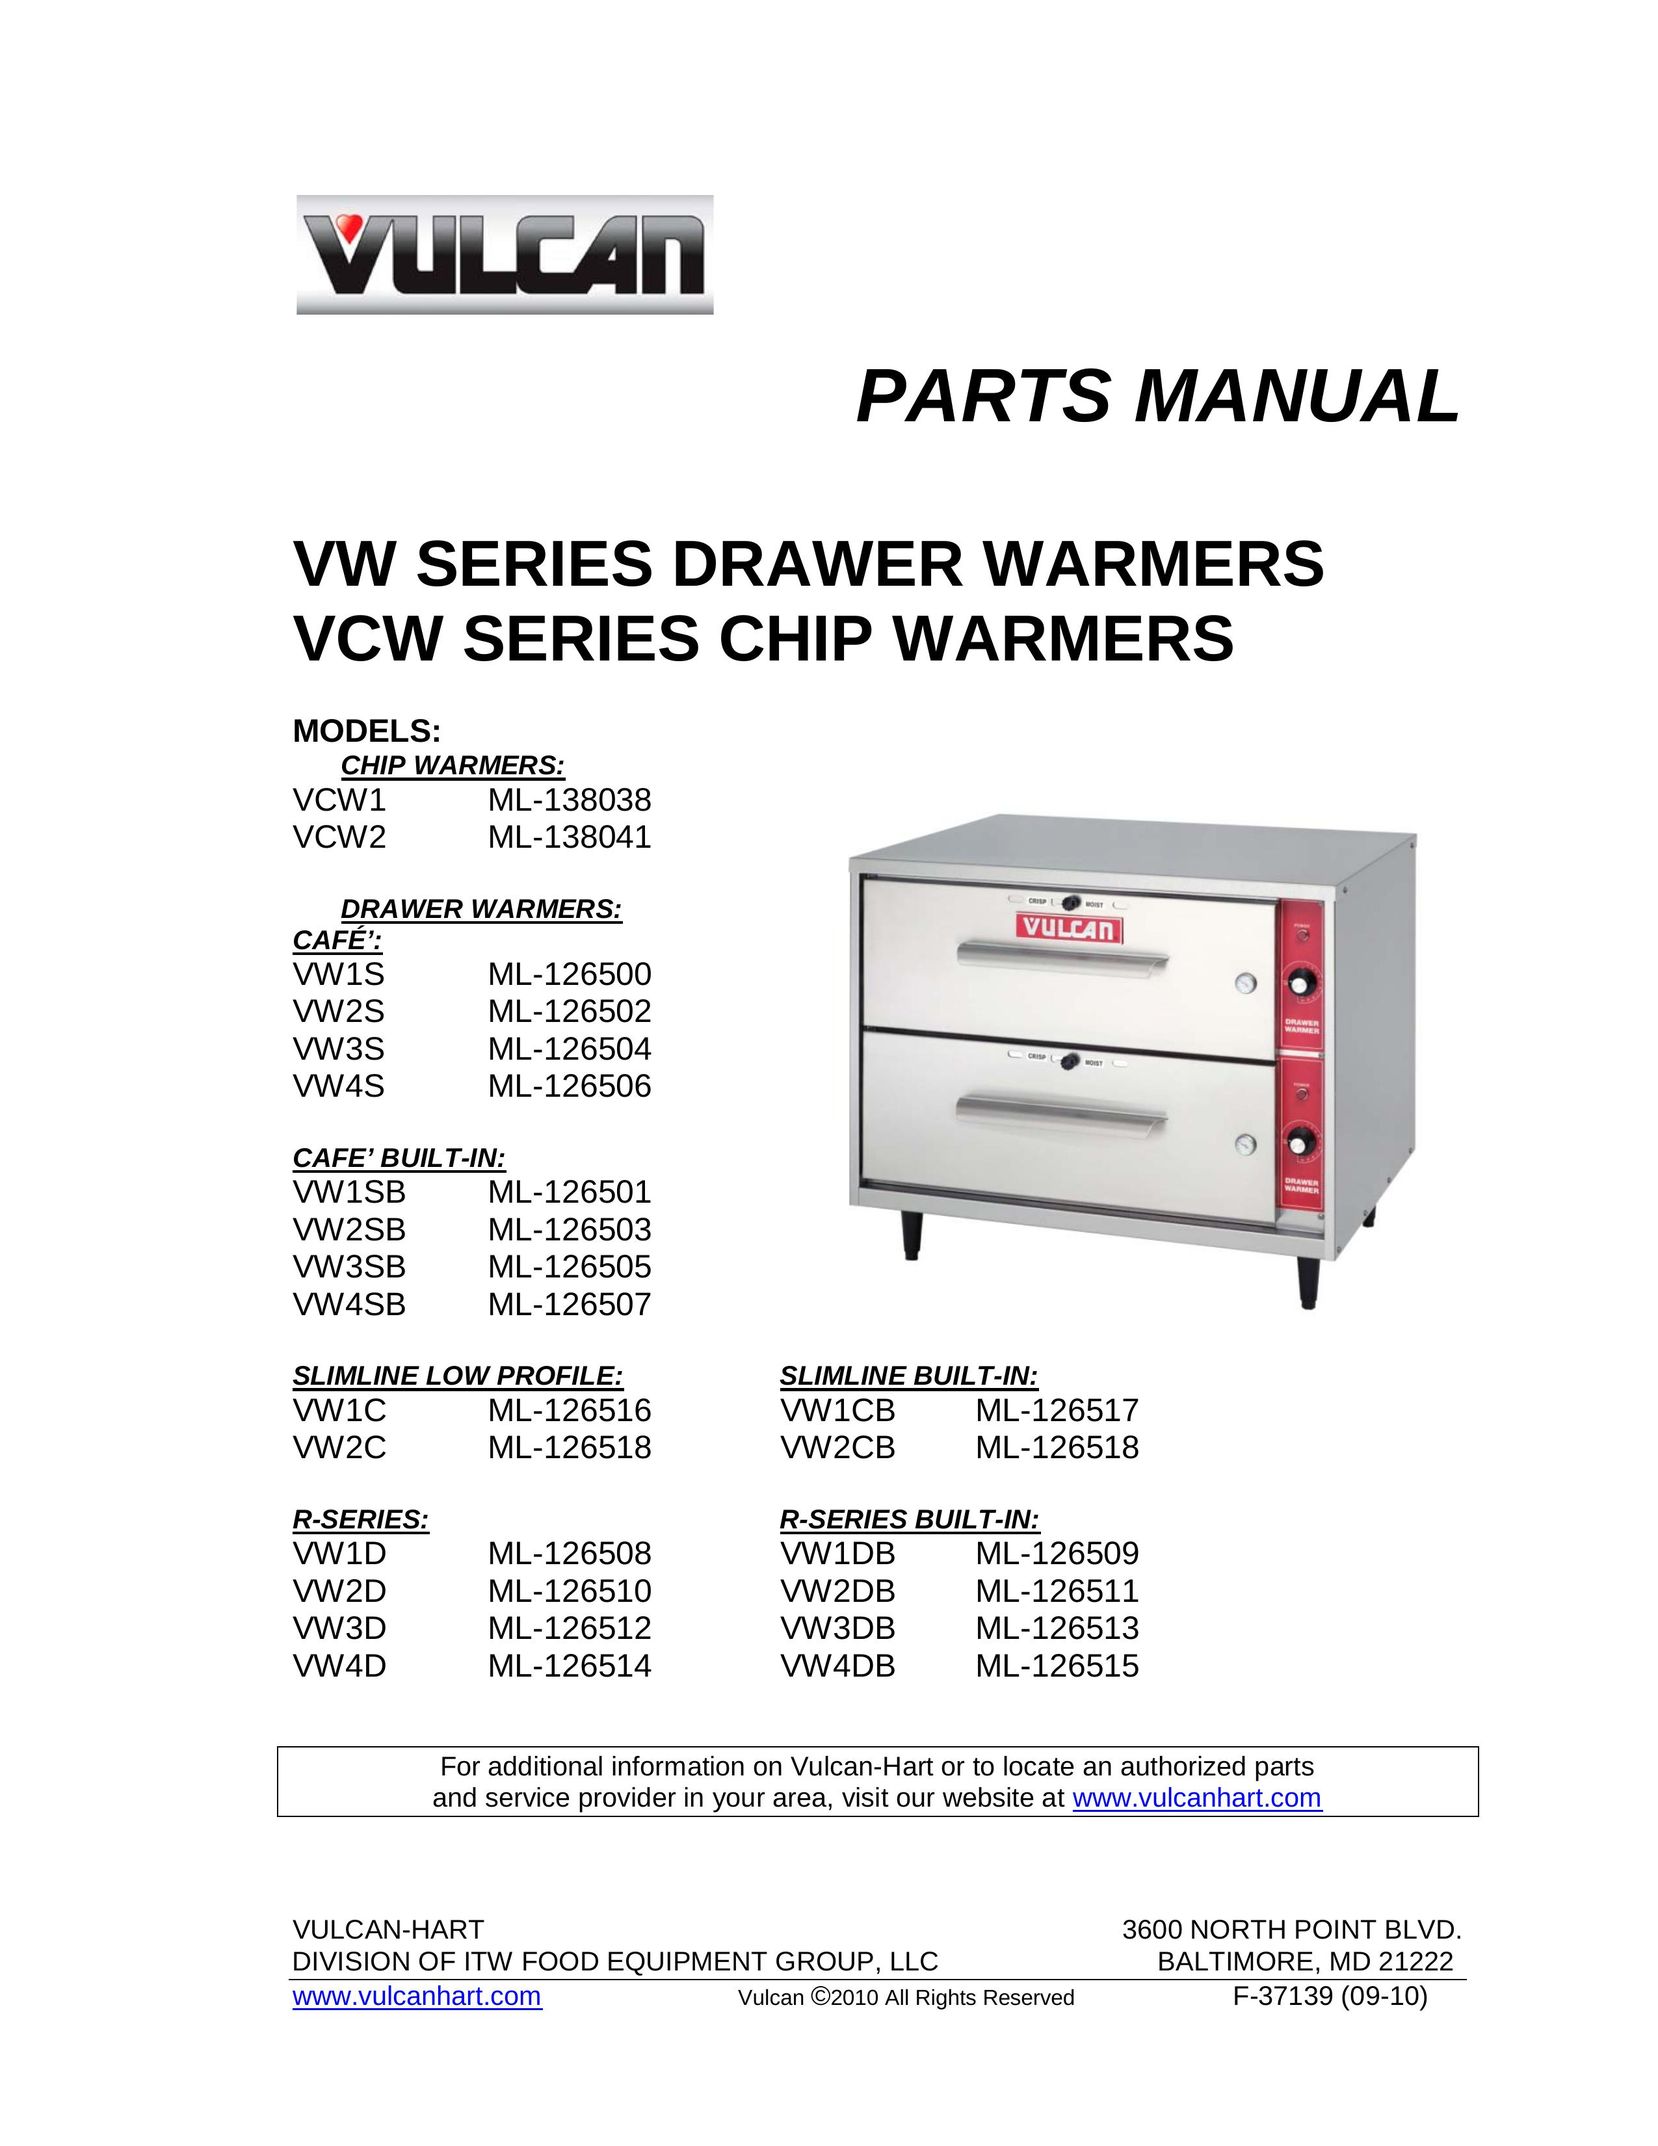 Vulcan-Hart VW1C ML-126516 Food Warmer User Manual